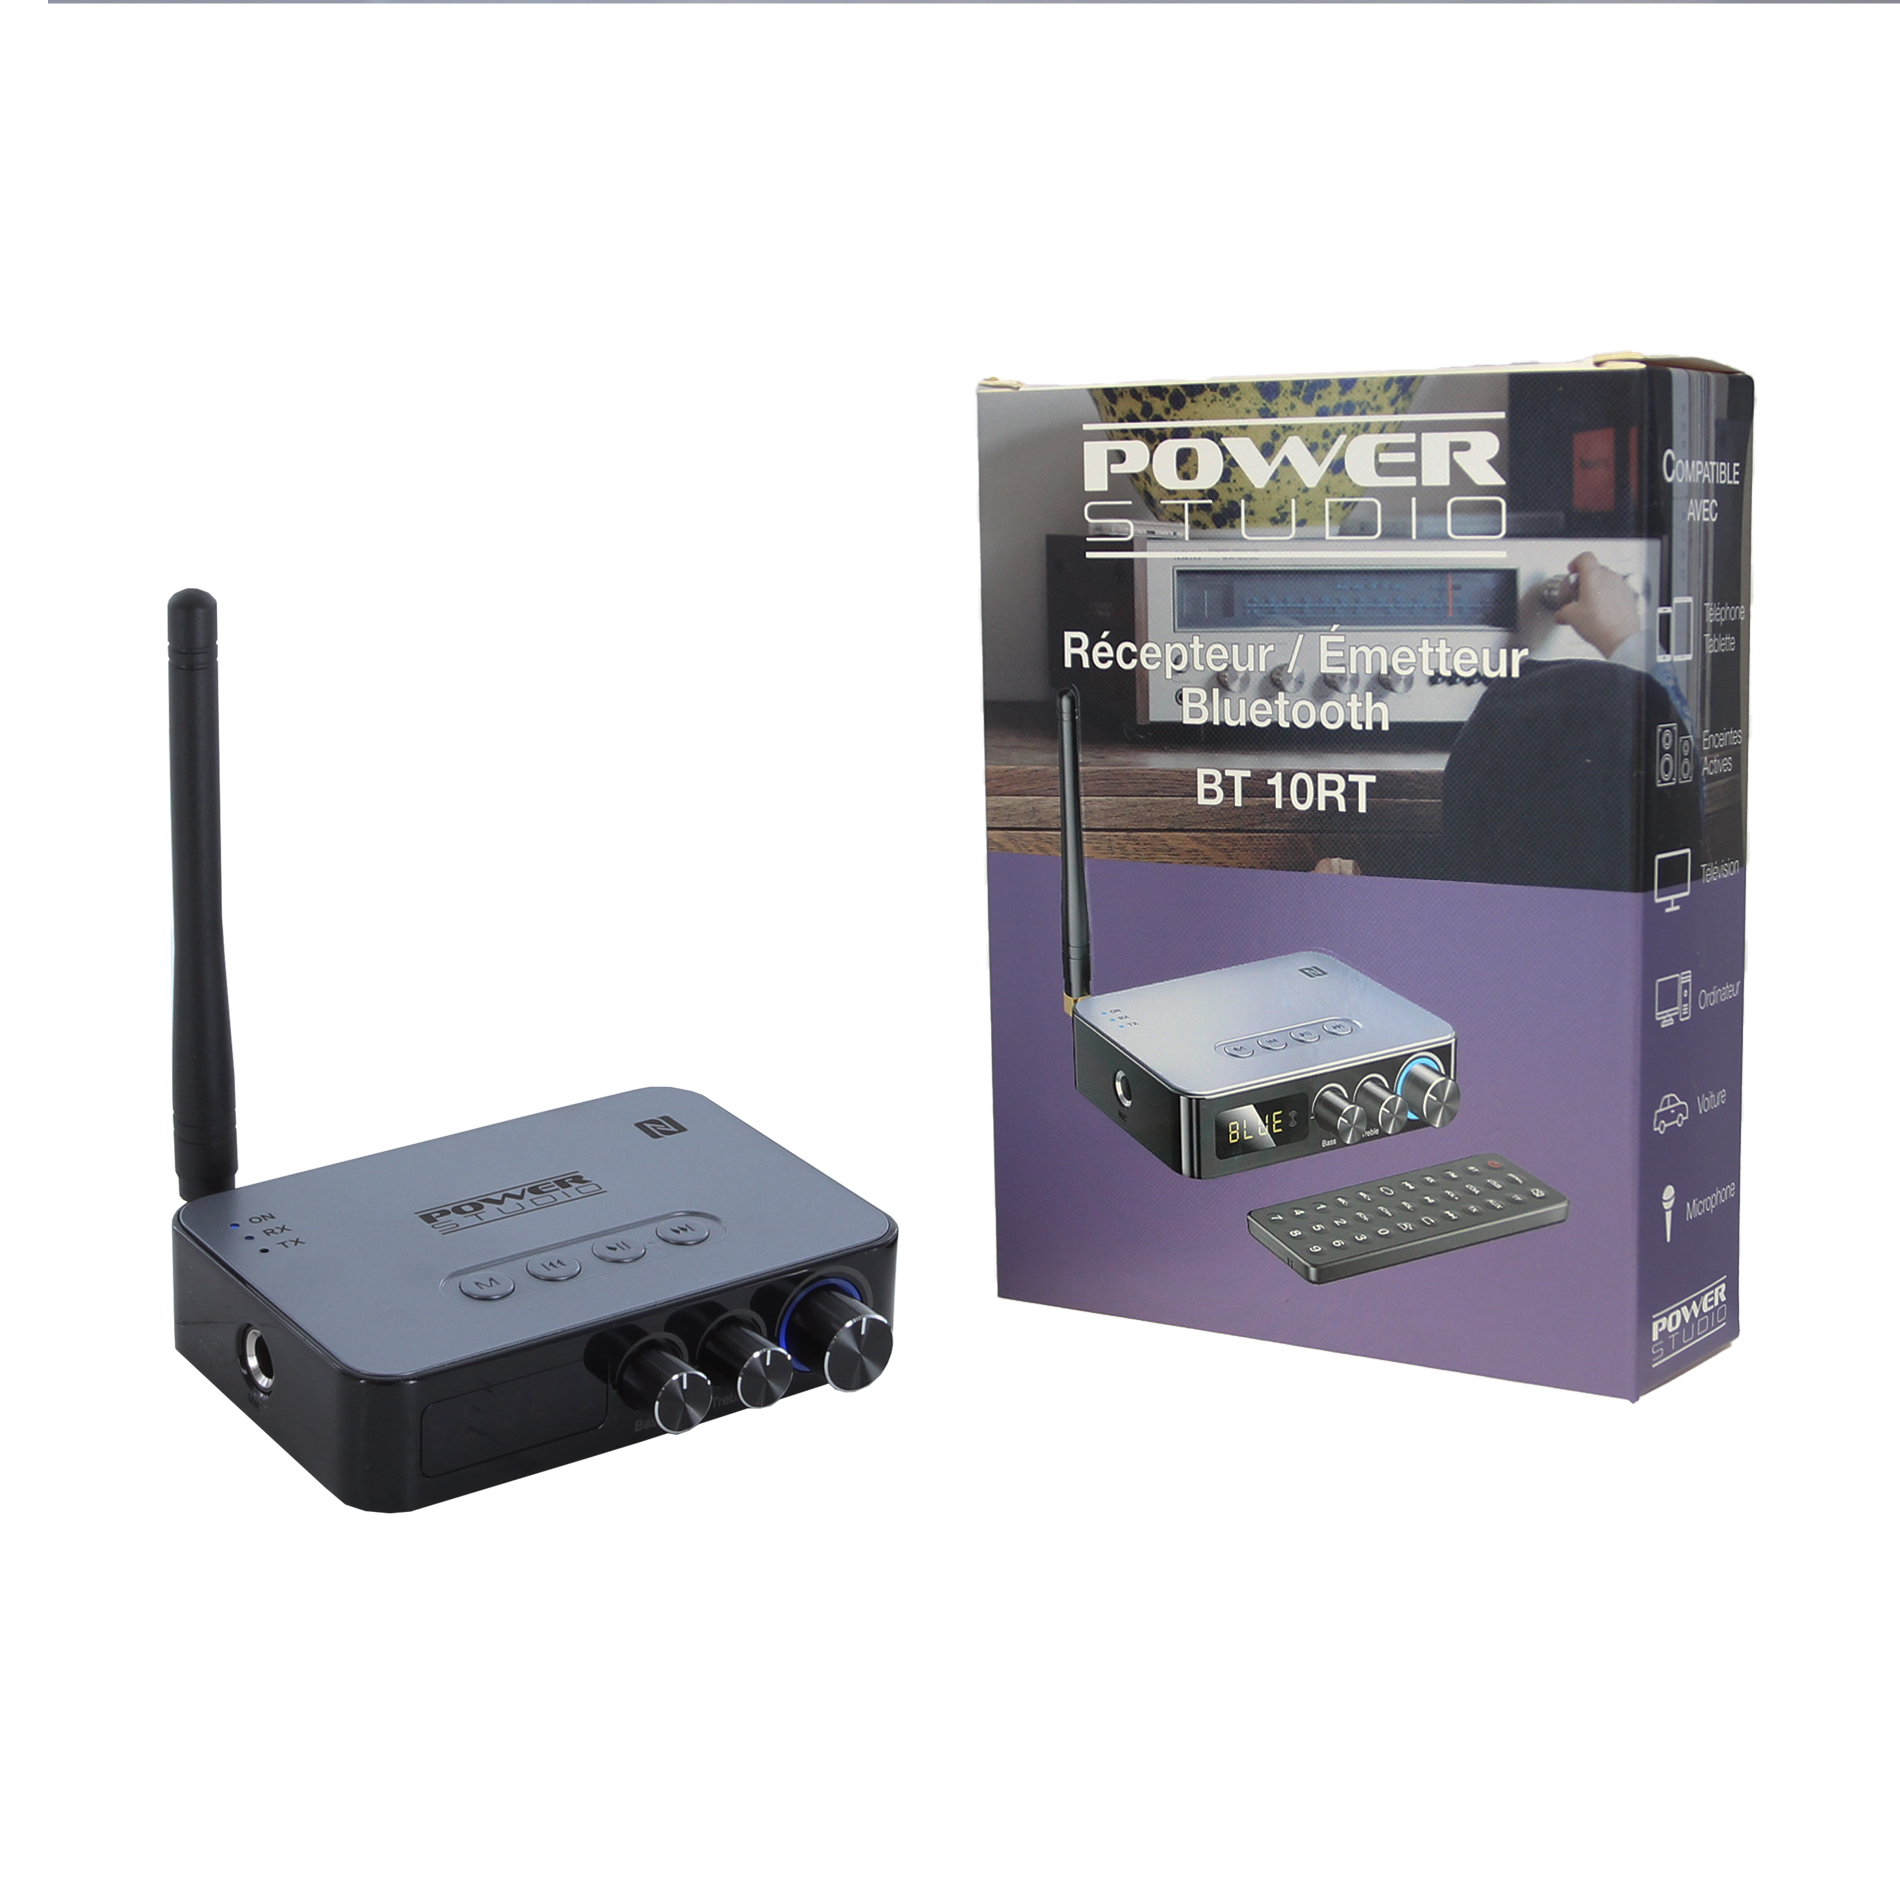 Power Studio Bt 10rt - PA-Funkübertragungssystem - Variation 5